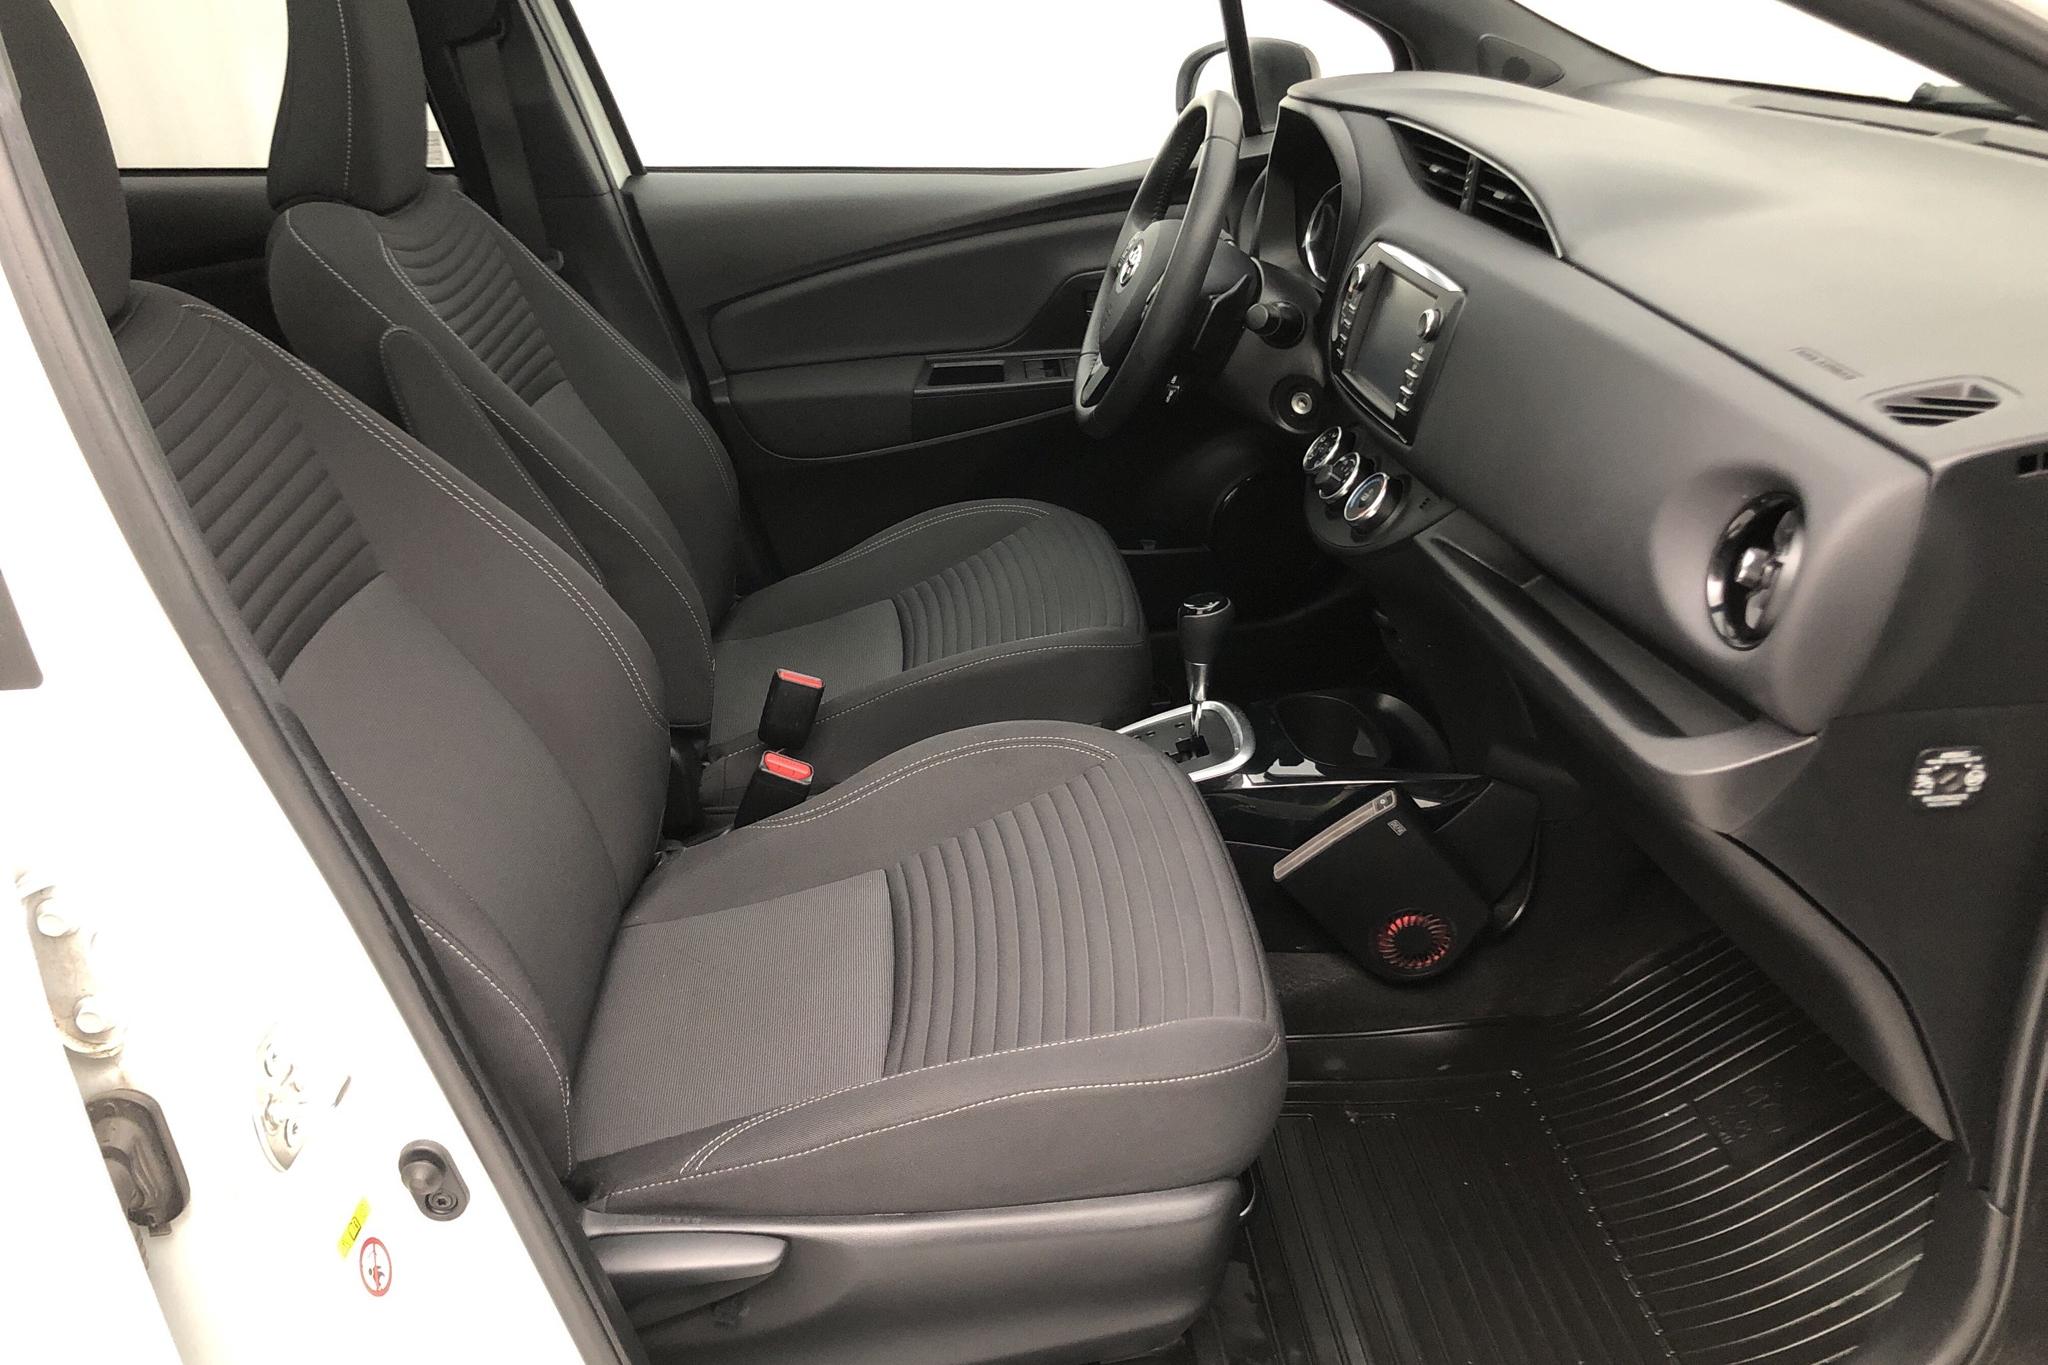 Toyota Yaris 1.5 5dr (111hk) - 8 000 km - Automatic - white - 2018